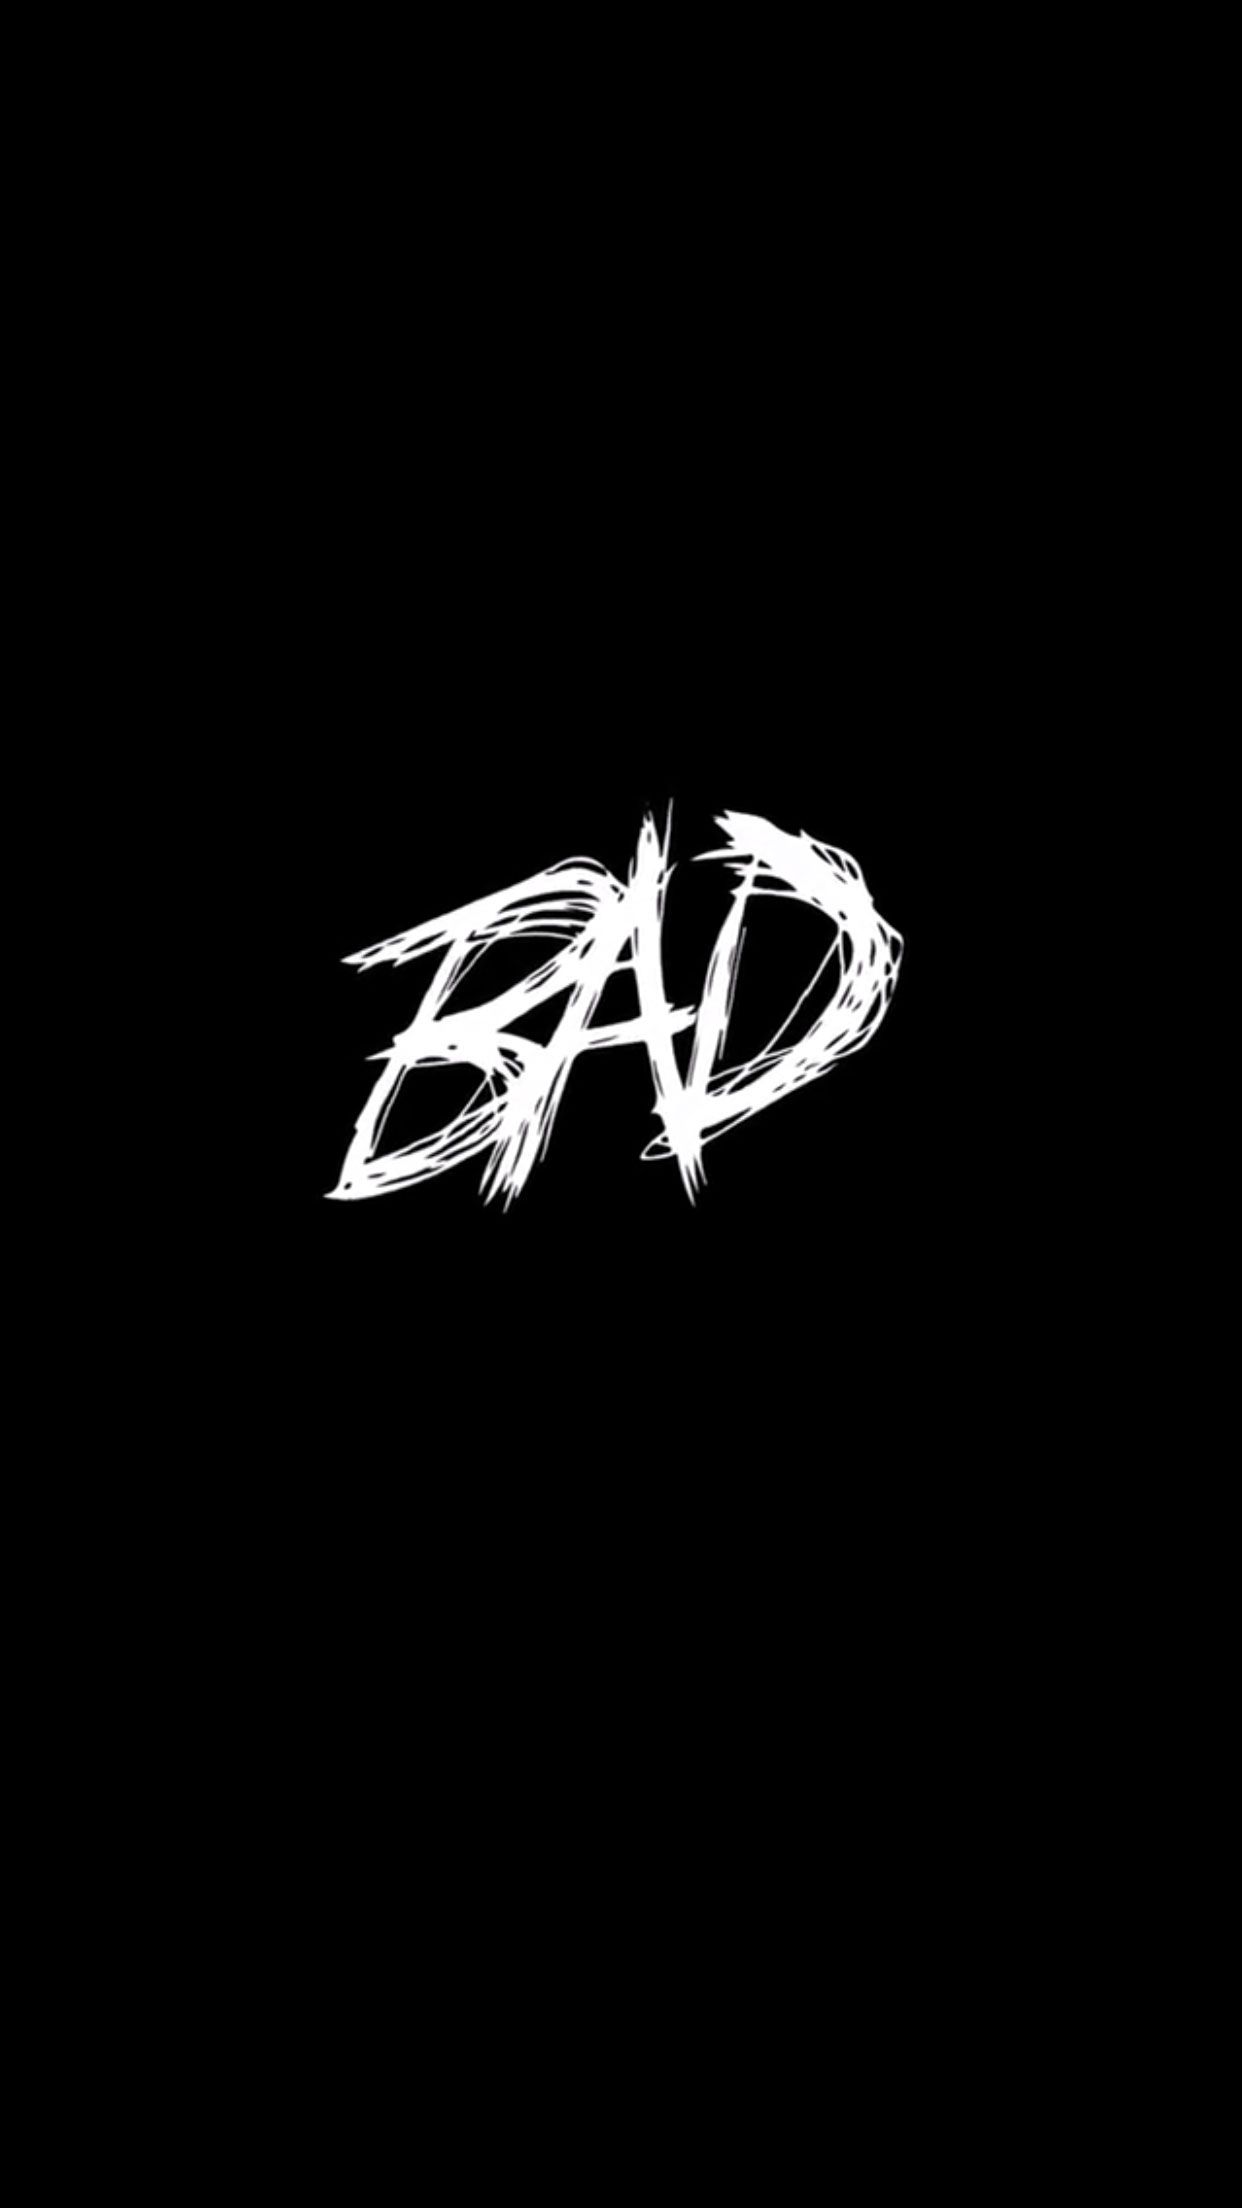 The bad logo in black and white - Black glitch